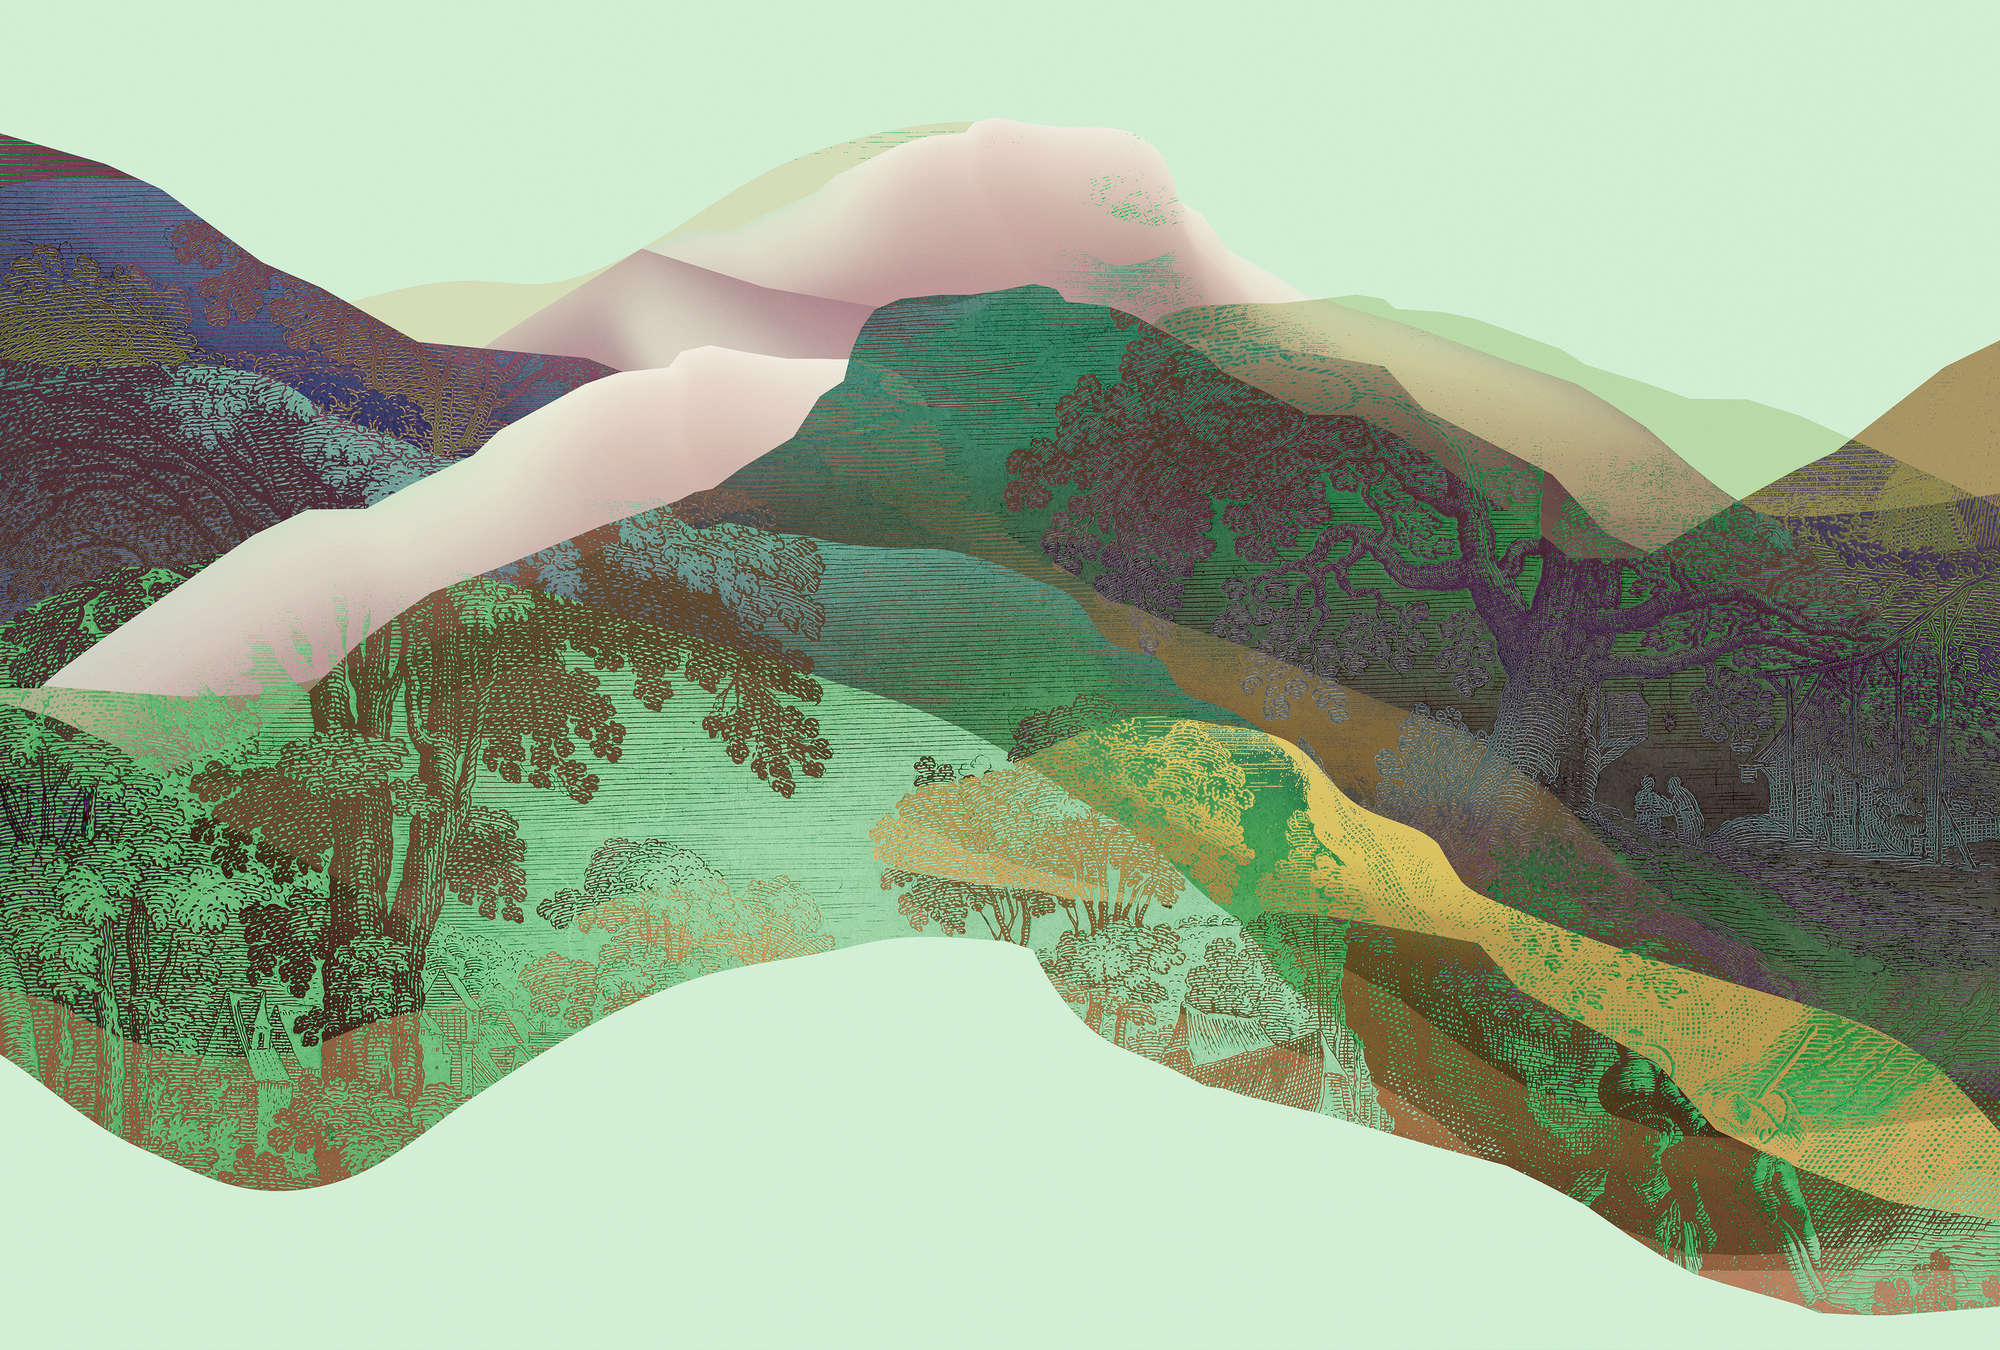             Magic Mountain 3 - Papier peint montagne verte design moderne
        